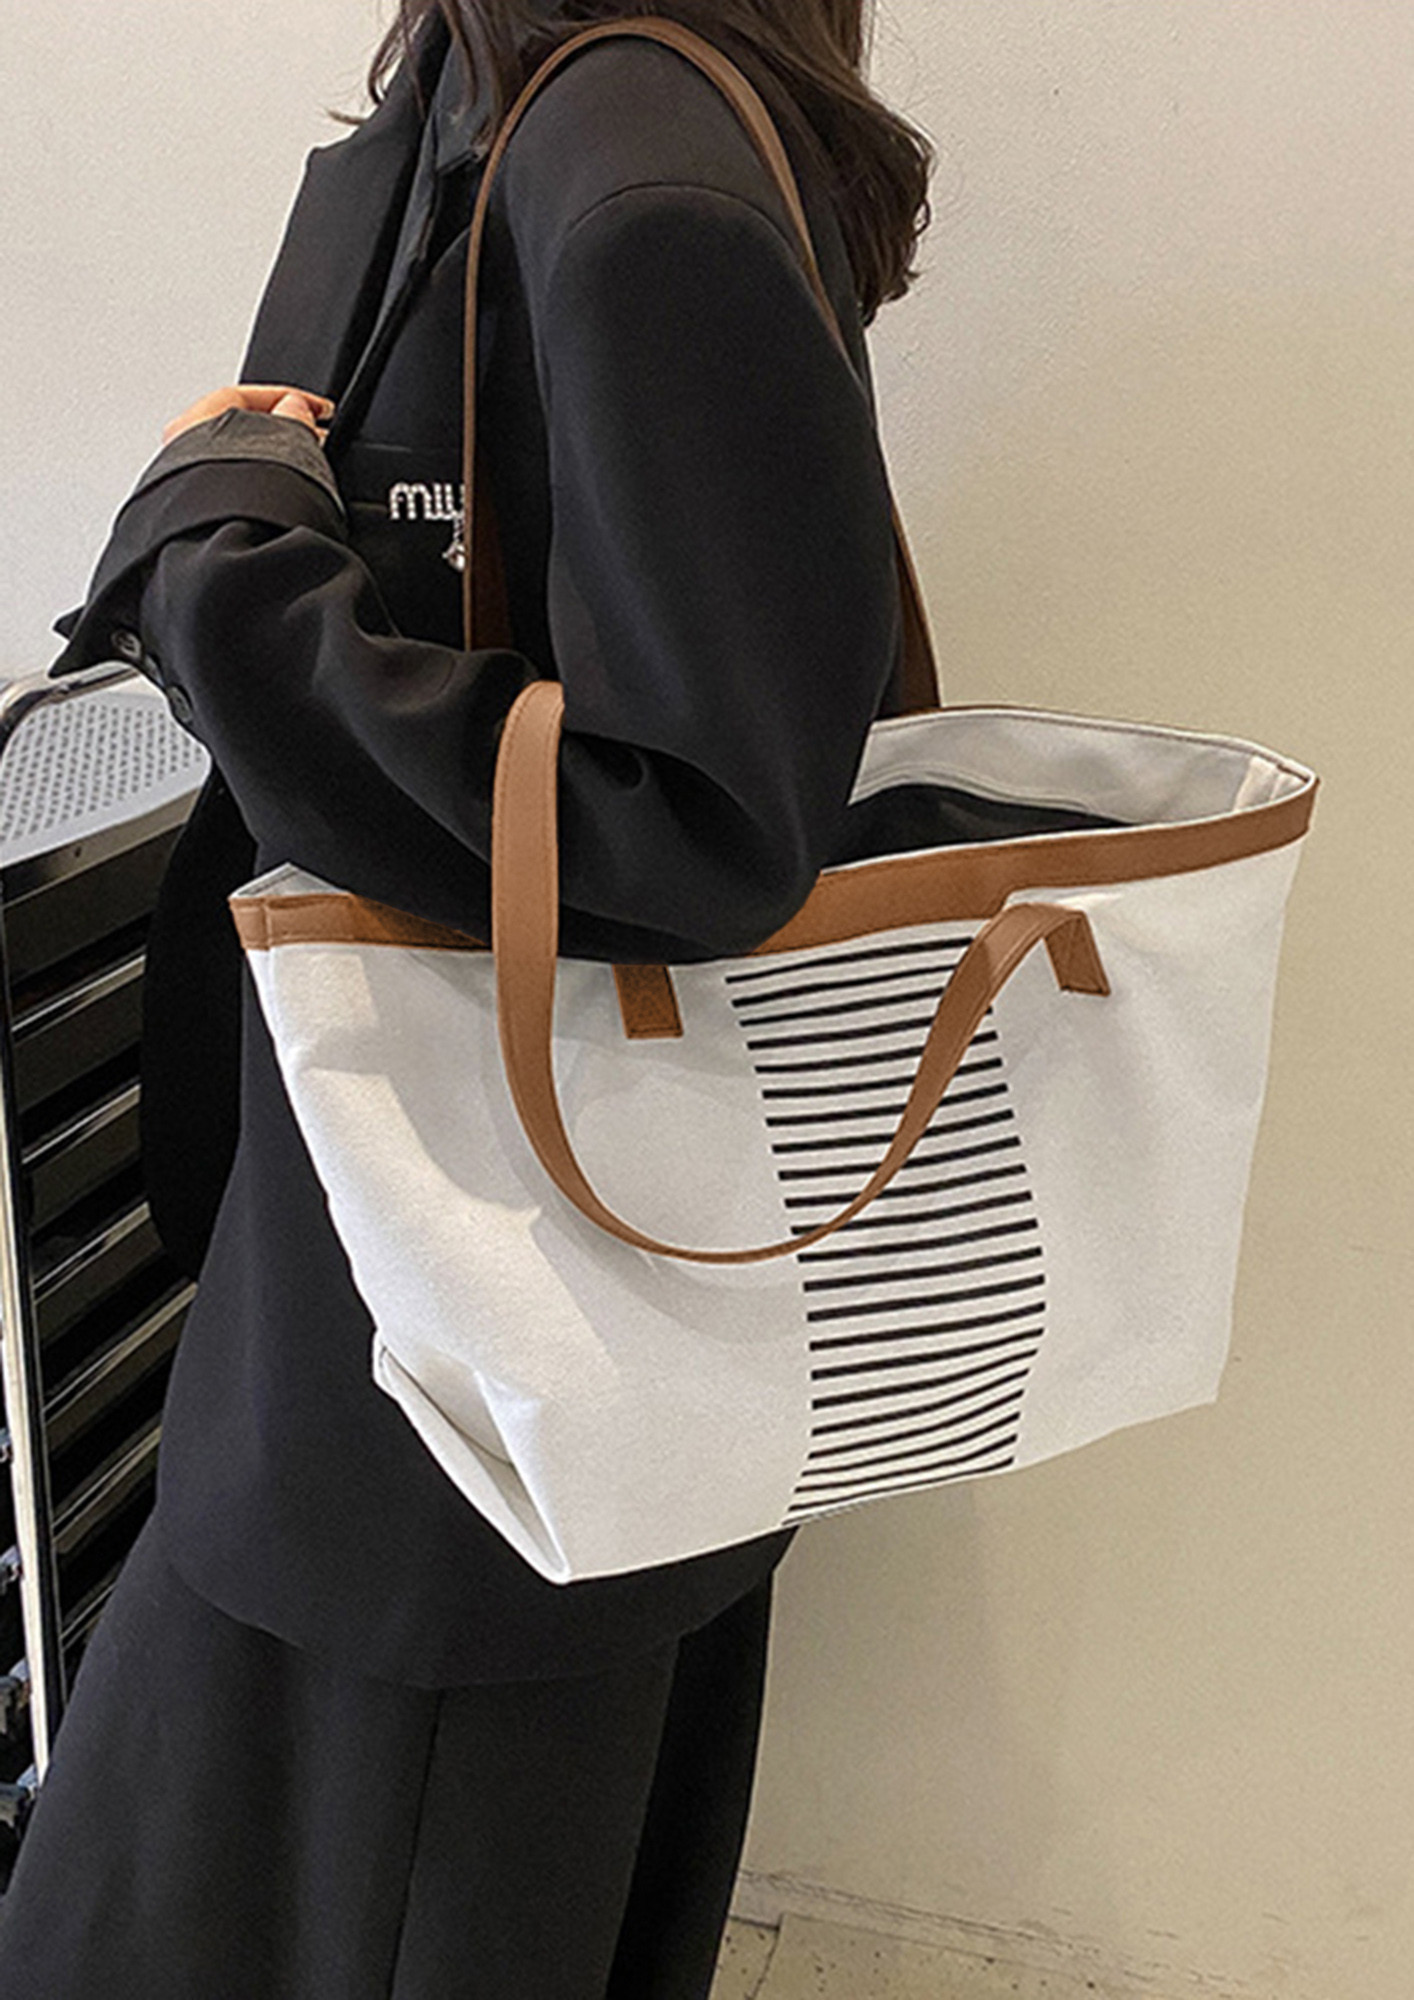 Cute Taupe Tote Bag - Striped Handbag - Faux Leather Bag - Lulus